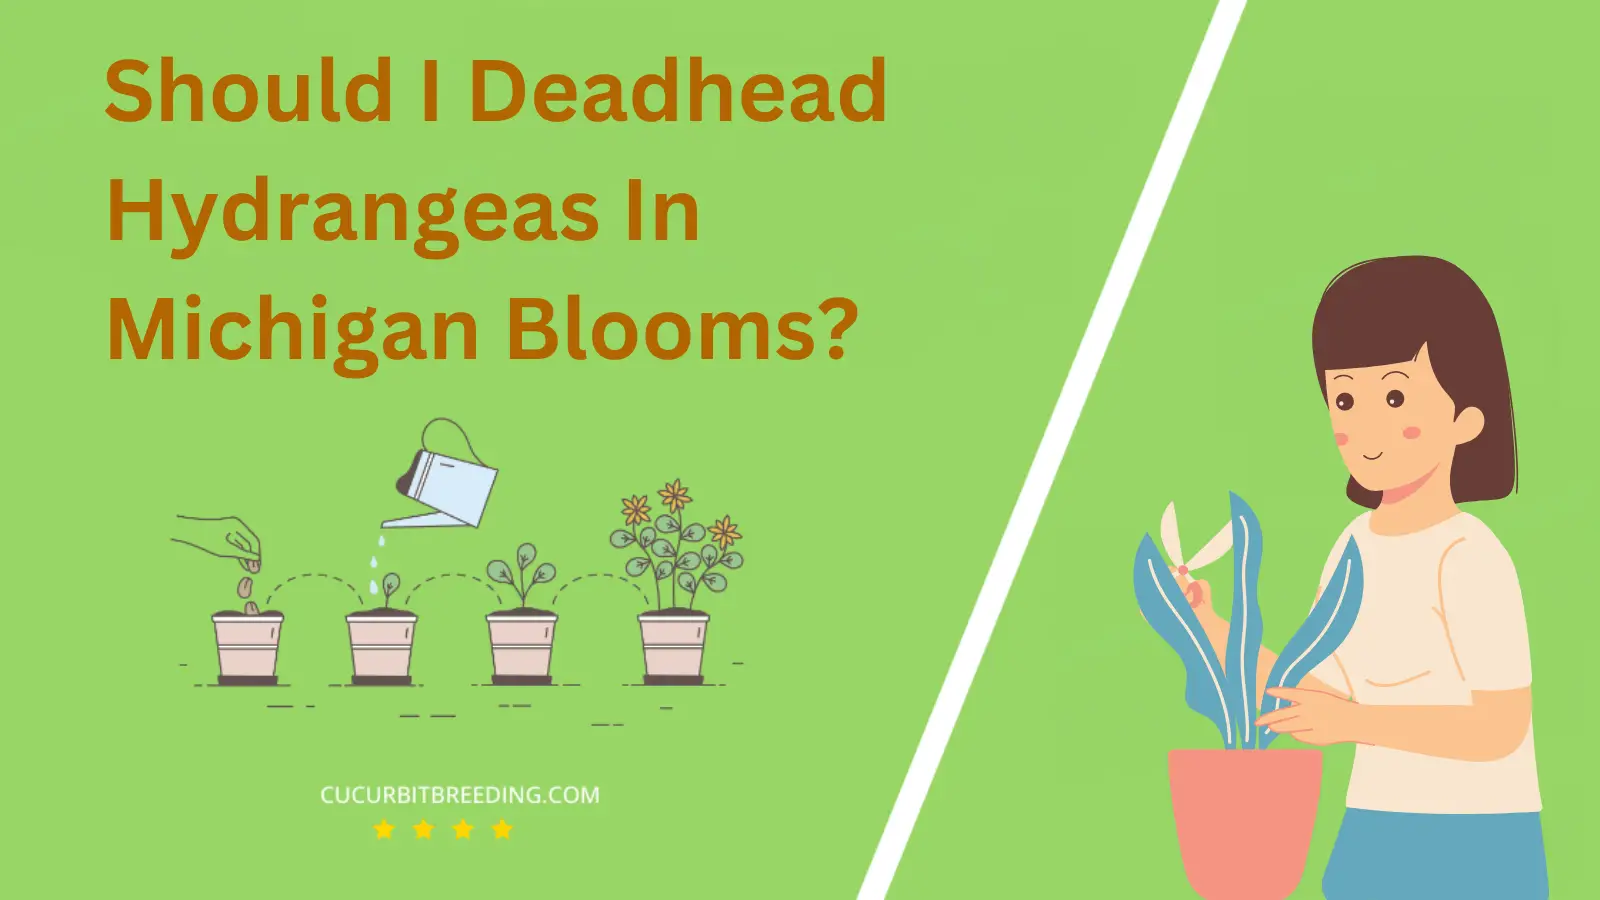 Should I Deadhead Hydrangeas In Michigan Blooms?